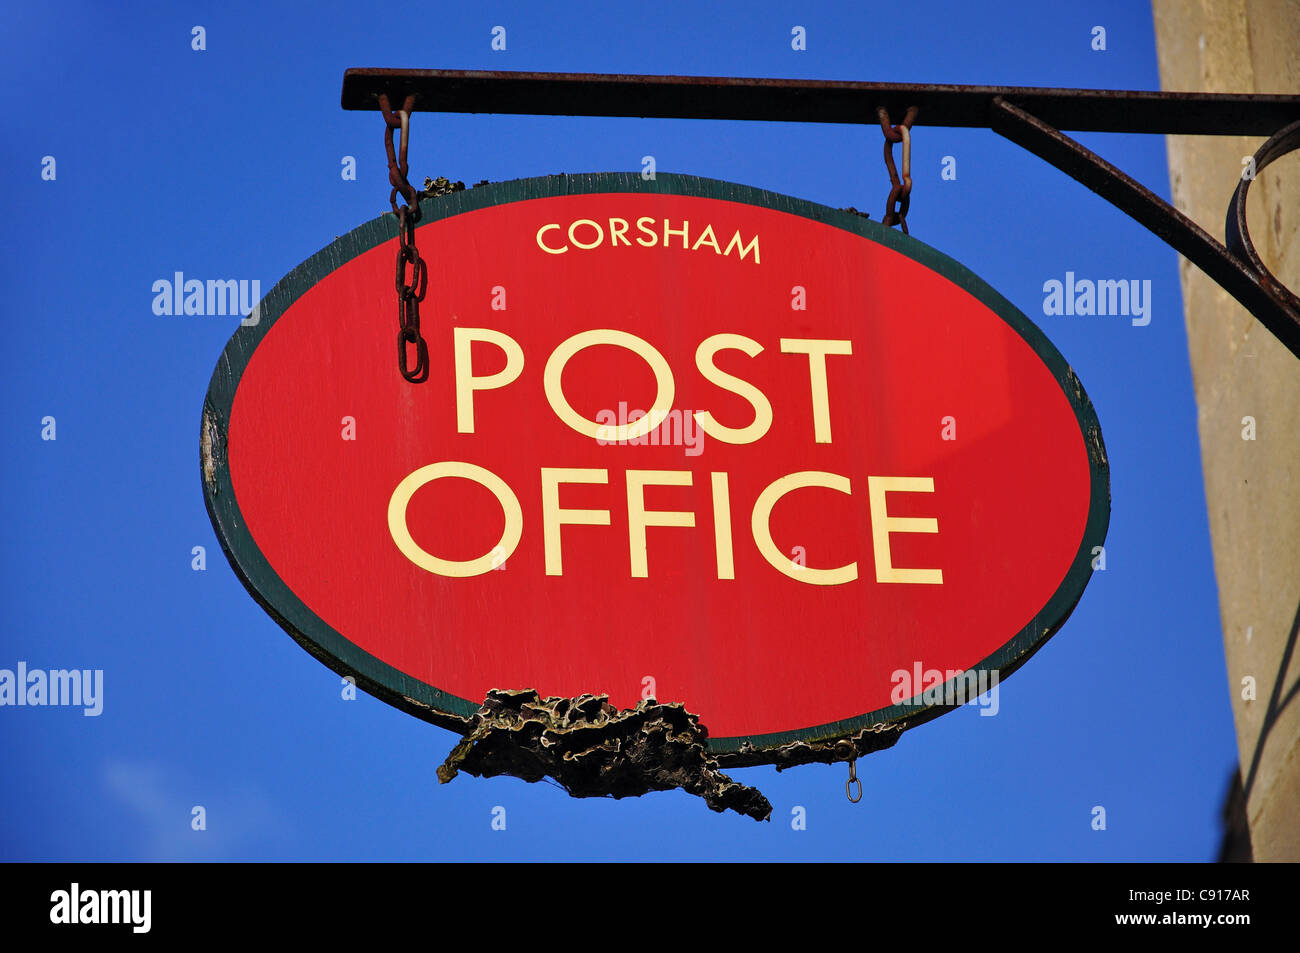 Corsham Post Office sign, High Street, Corsham, Wiltshire, England, United Kingdom Stock Photo